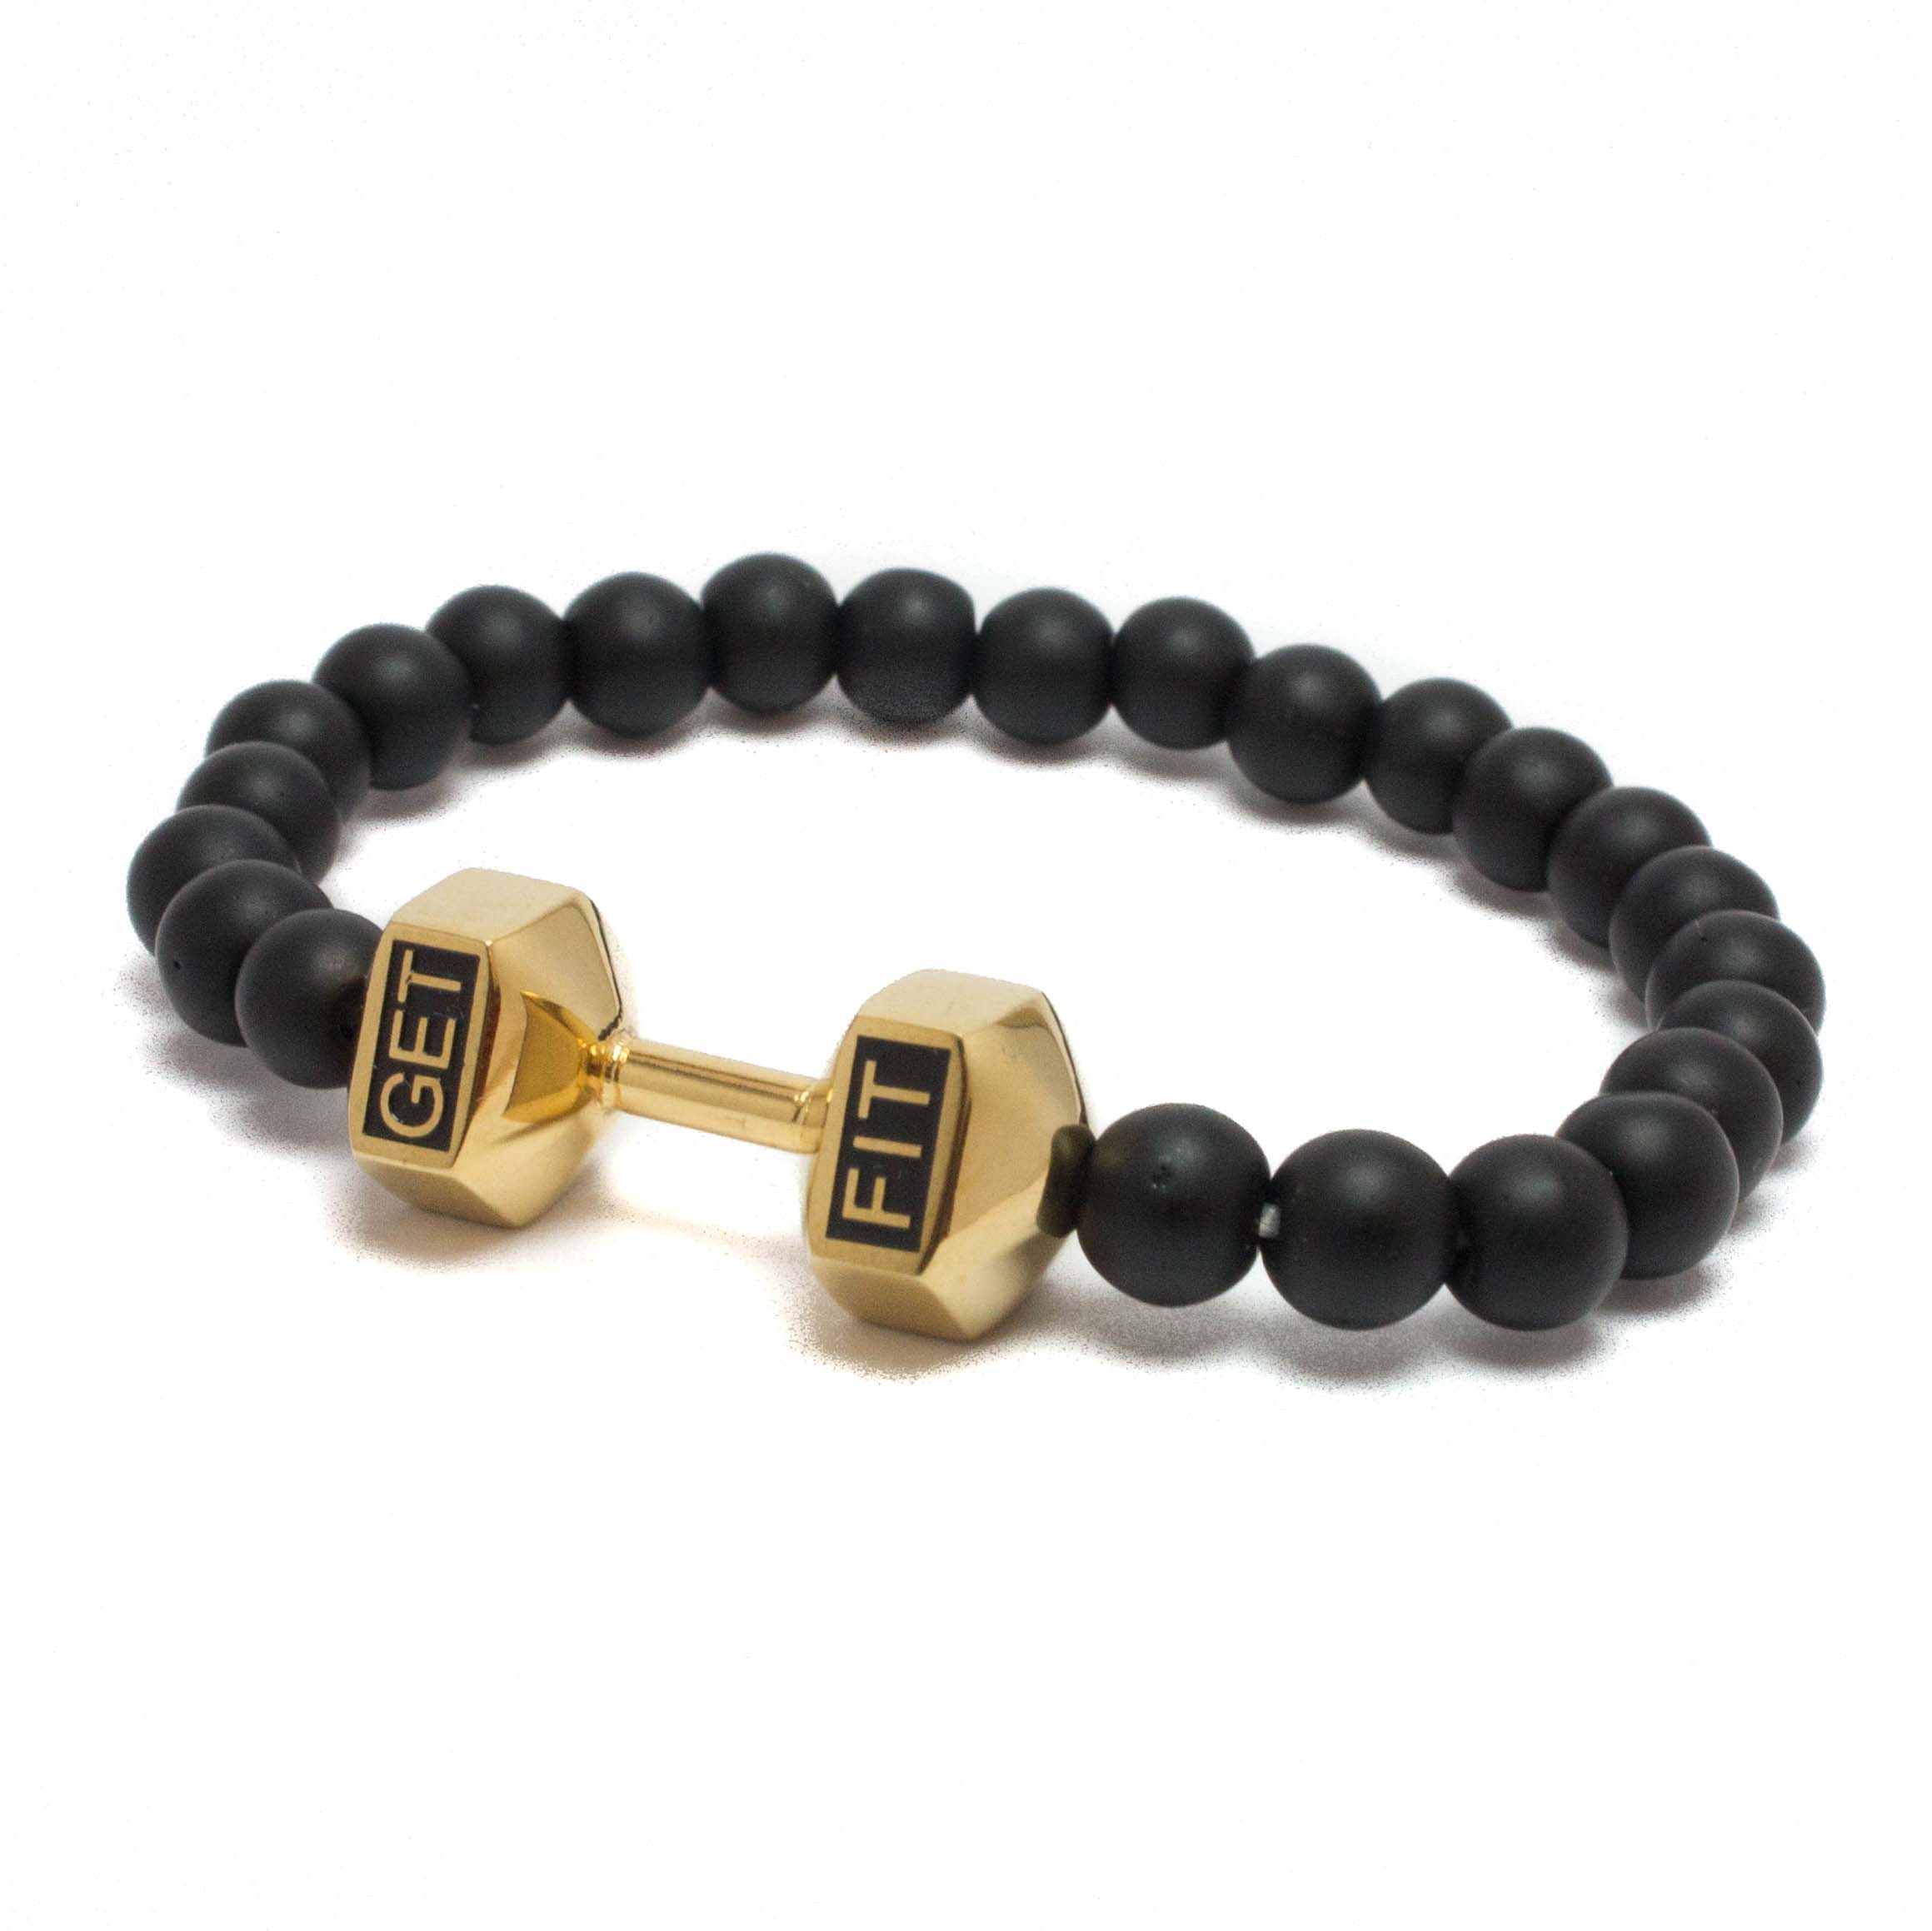 Gold Dumbbell Bracelet with Black Beads | GETFIT